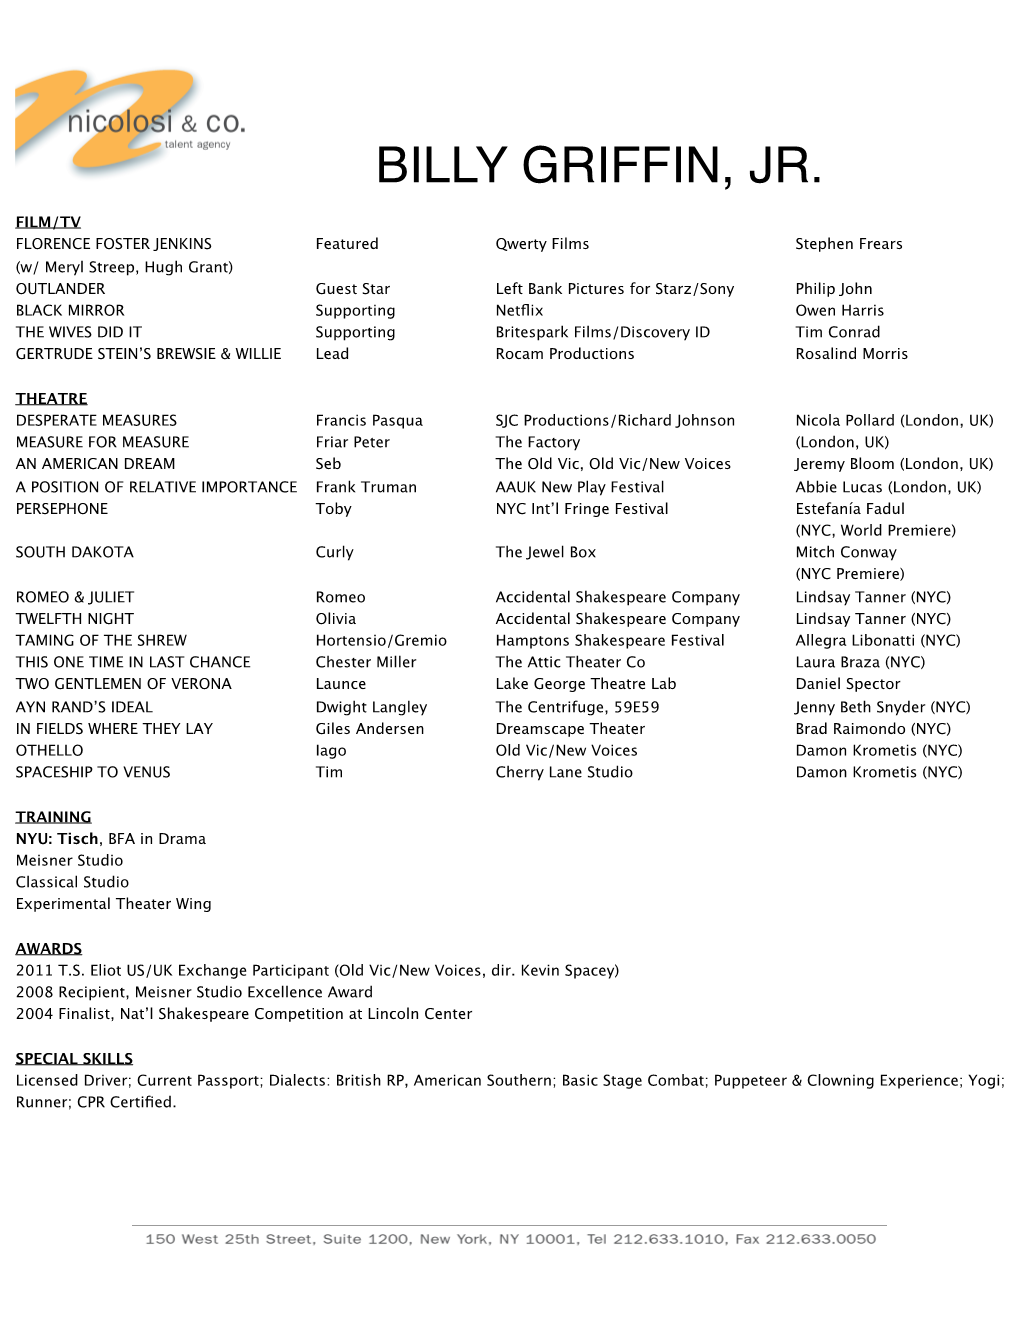 Billy Griffin Jr Agent Resume